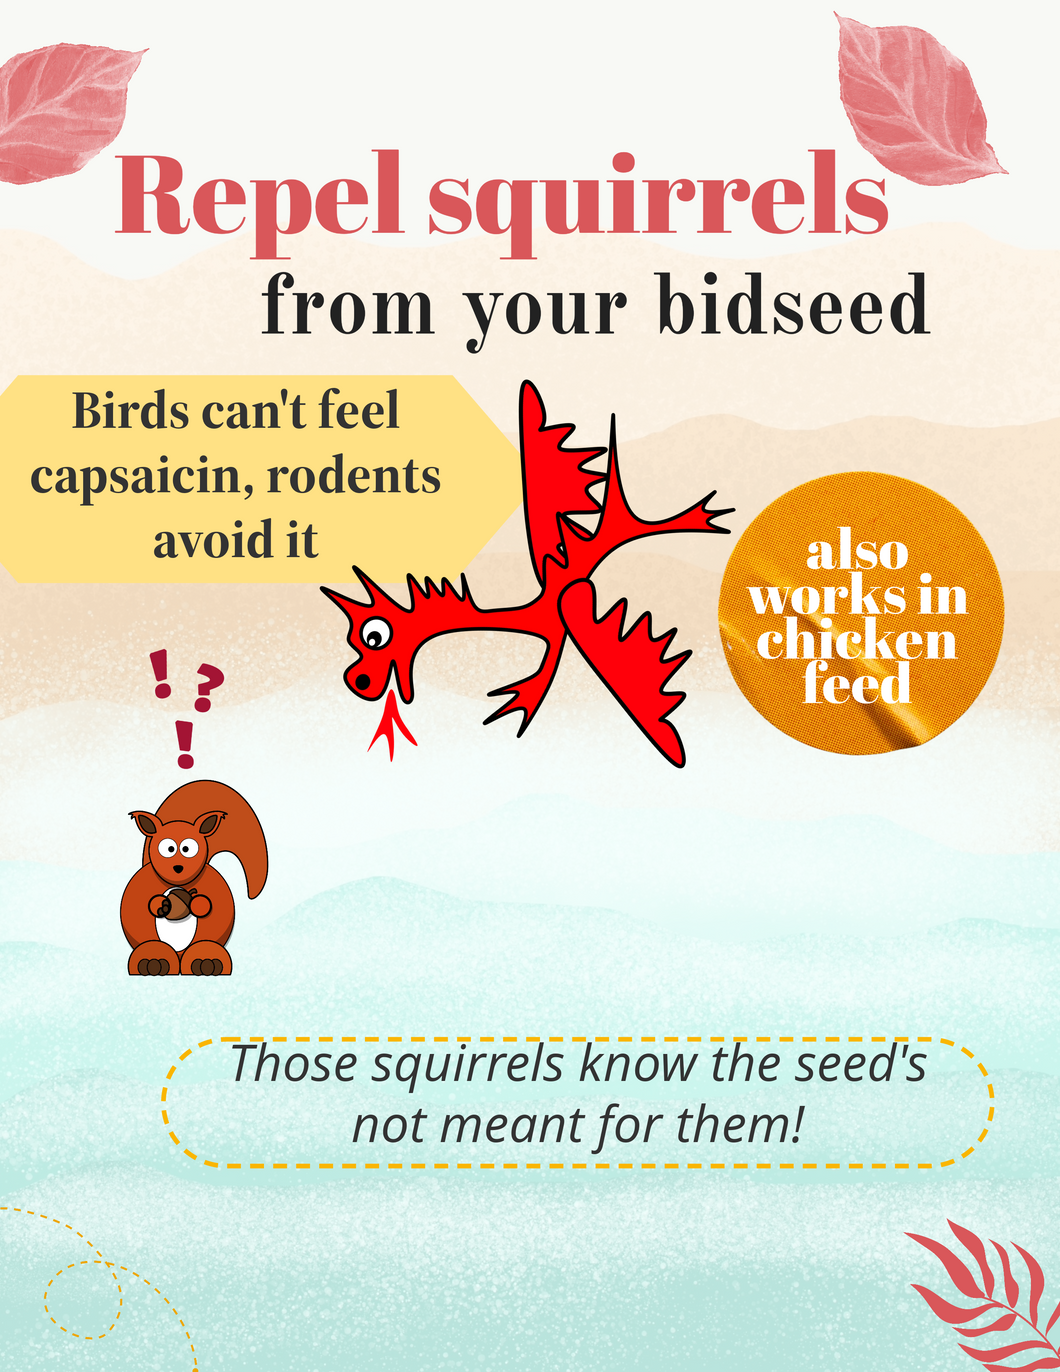 Dragon's defense - repel squirrels from birdseed!